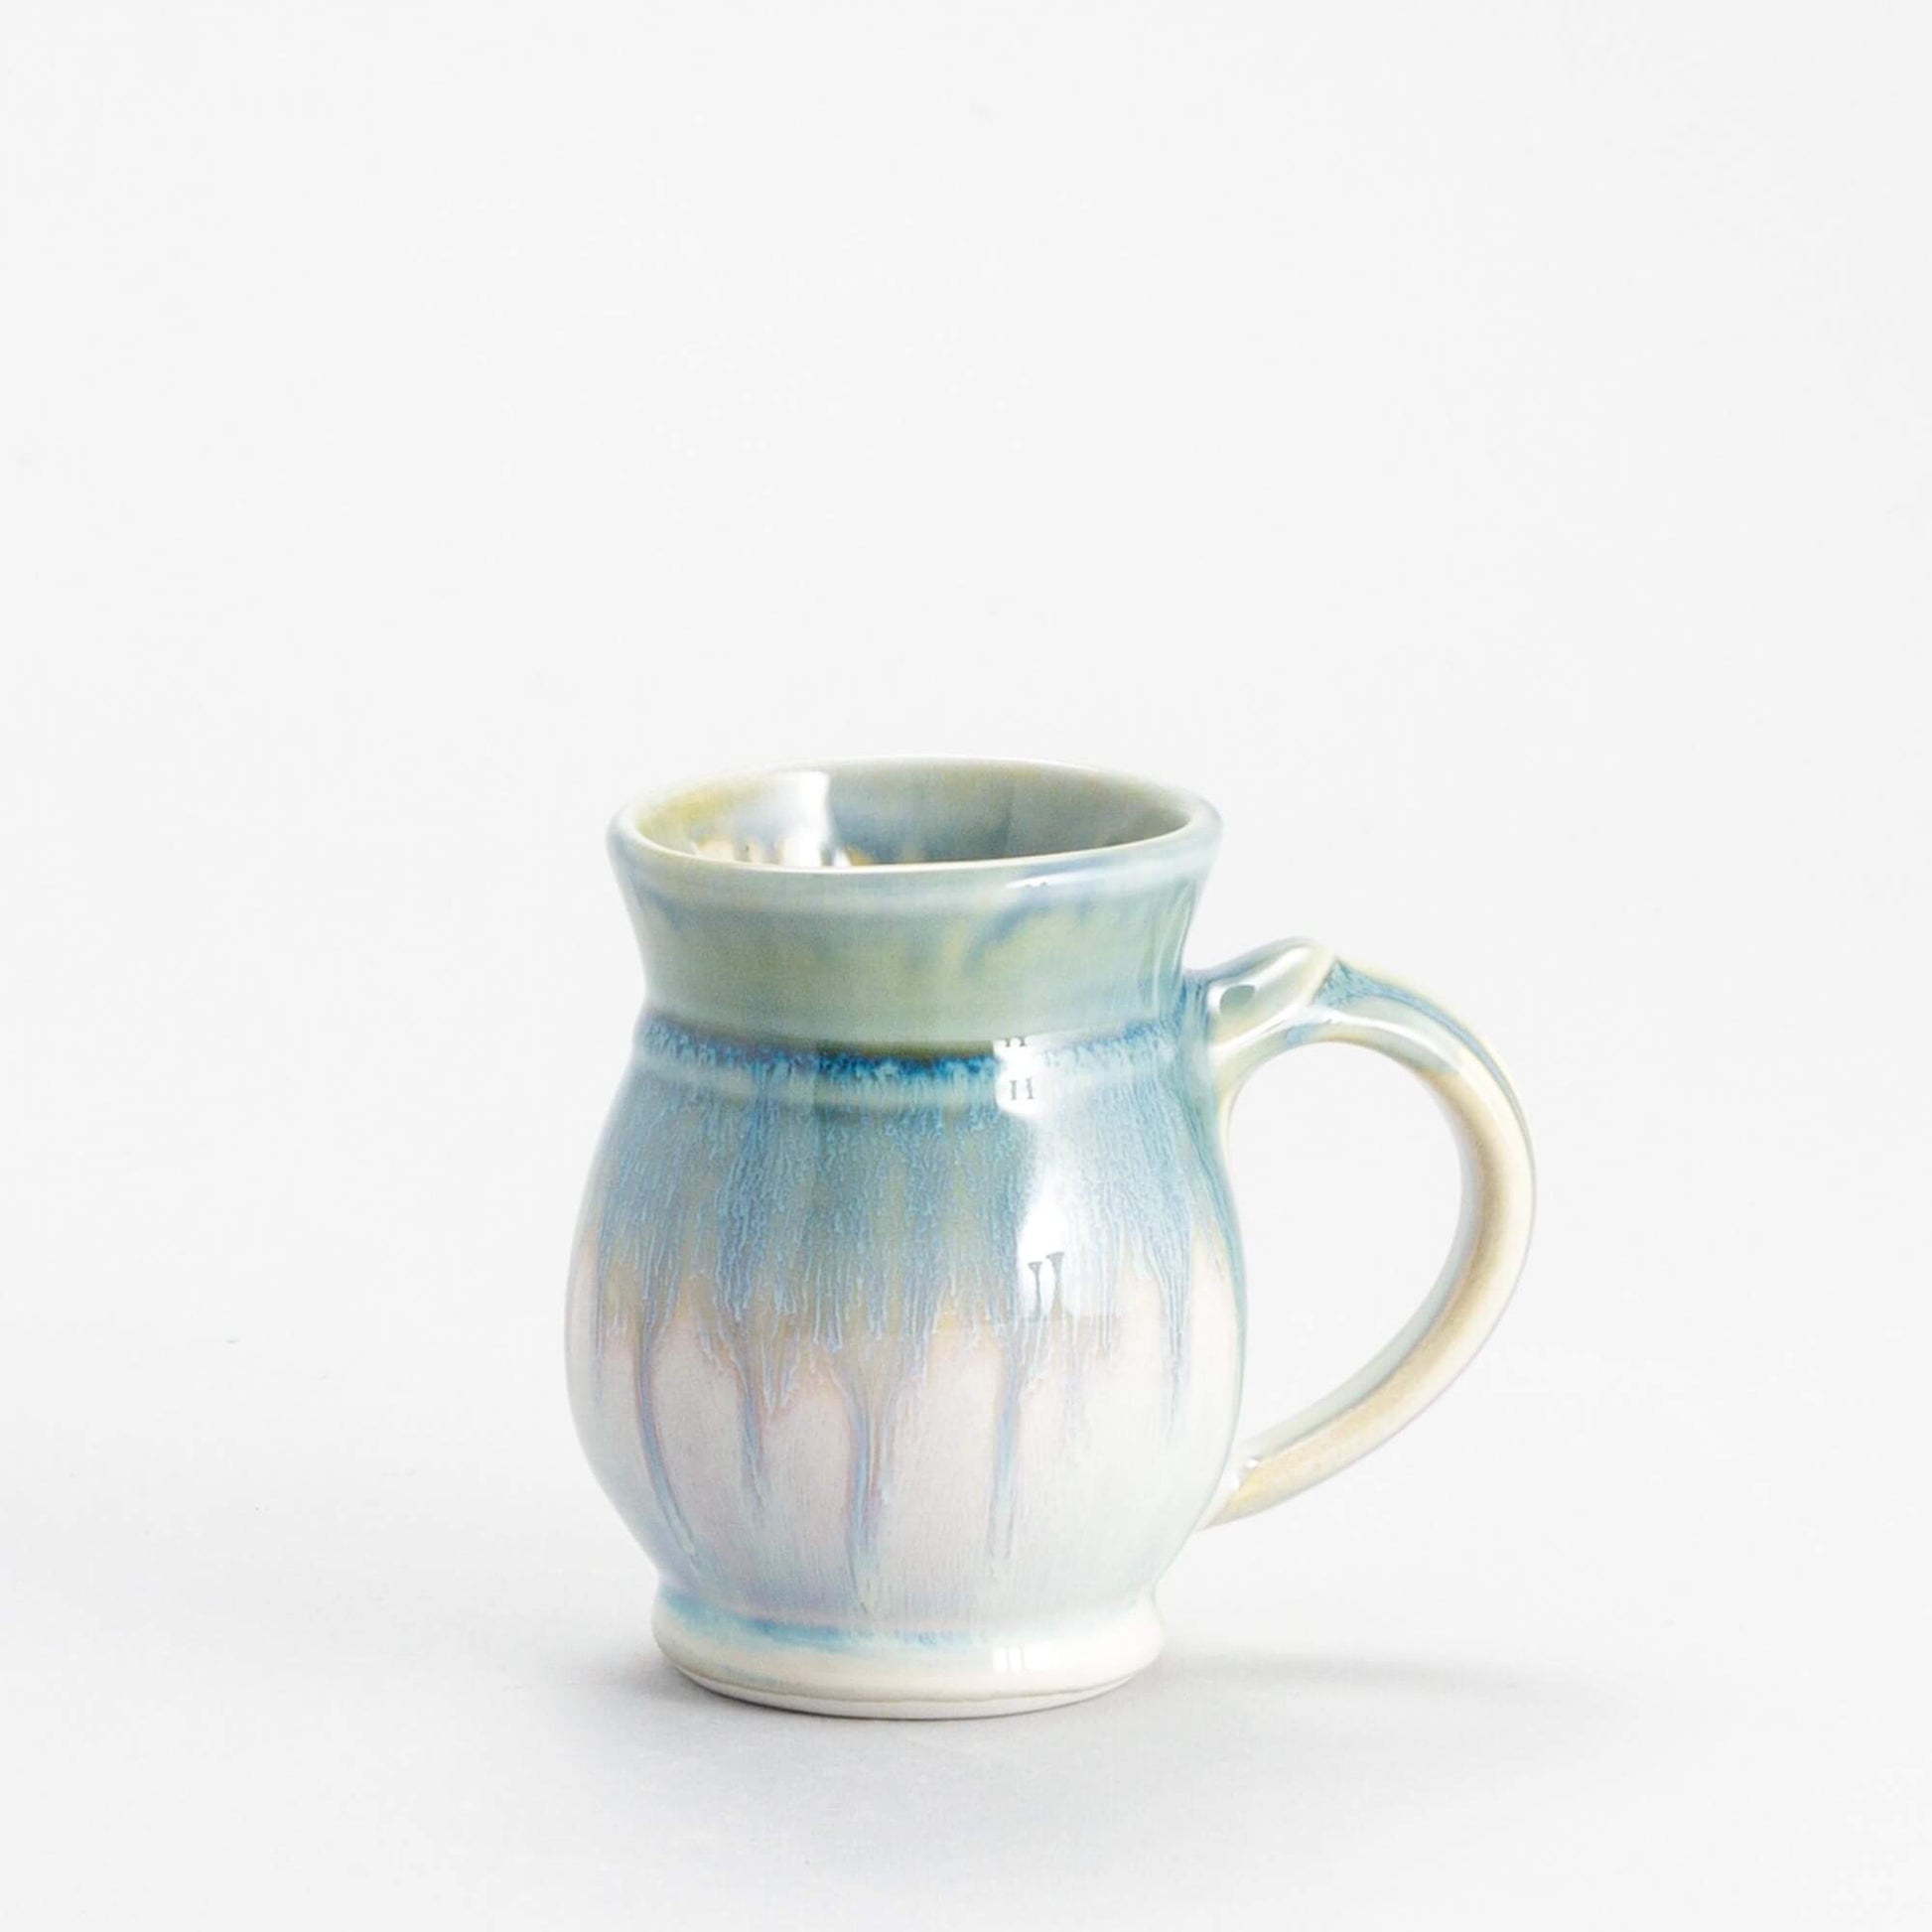 Handmade Pottery Curvy Mug made by Georgetown Pottery in Maine Ivory & Blue Oribe